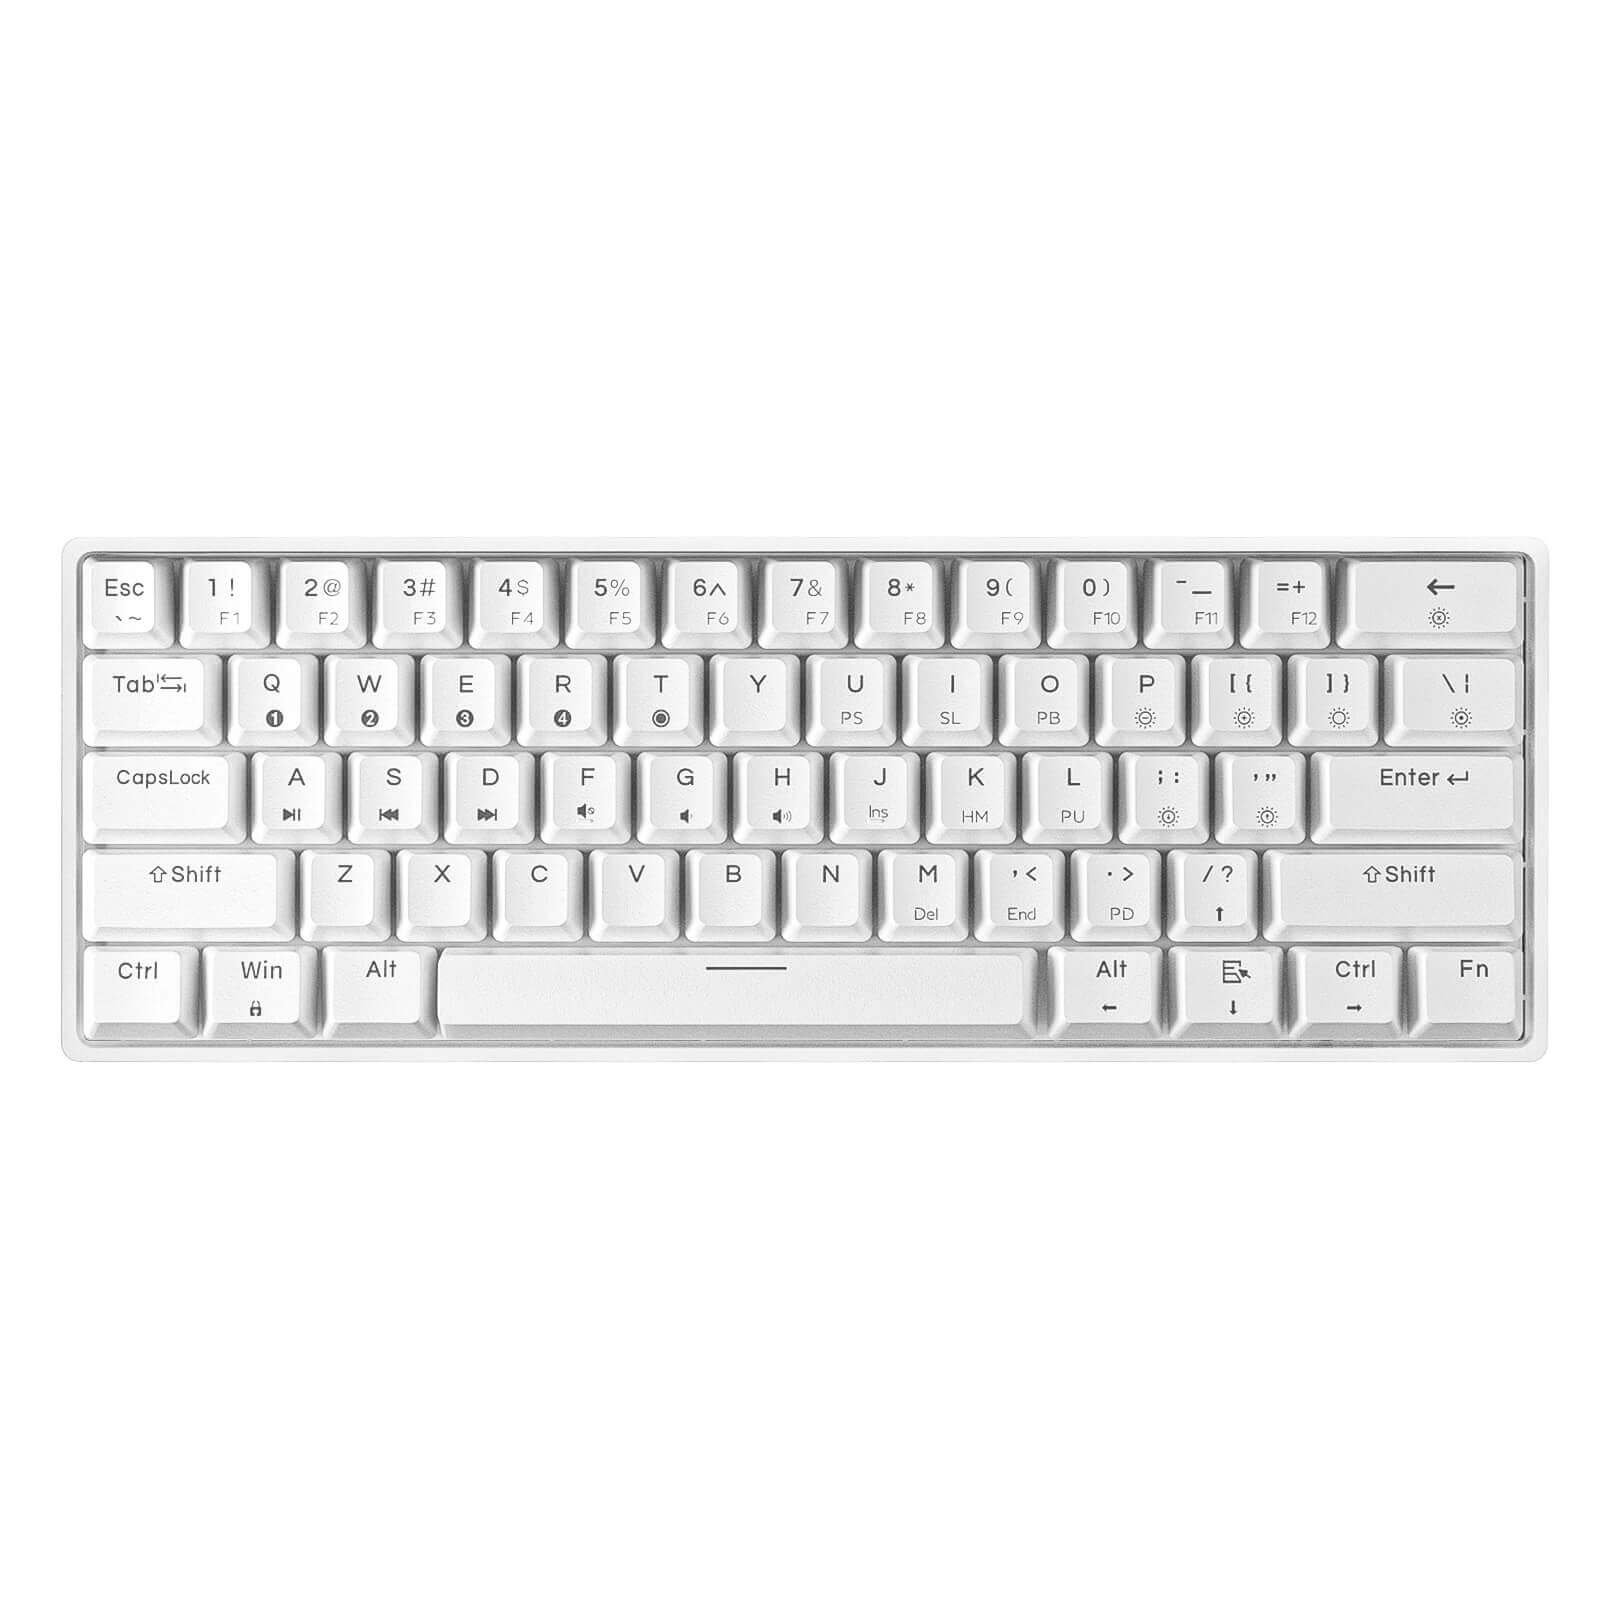 Dierya DK61E mechanical keyboard review - Bringing back the clack